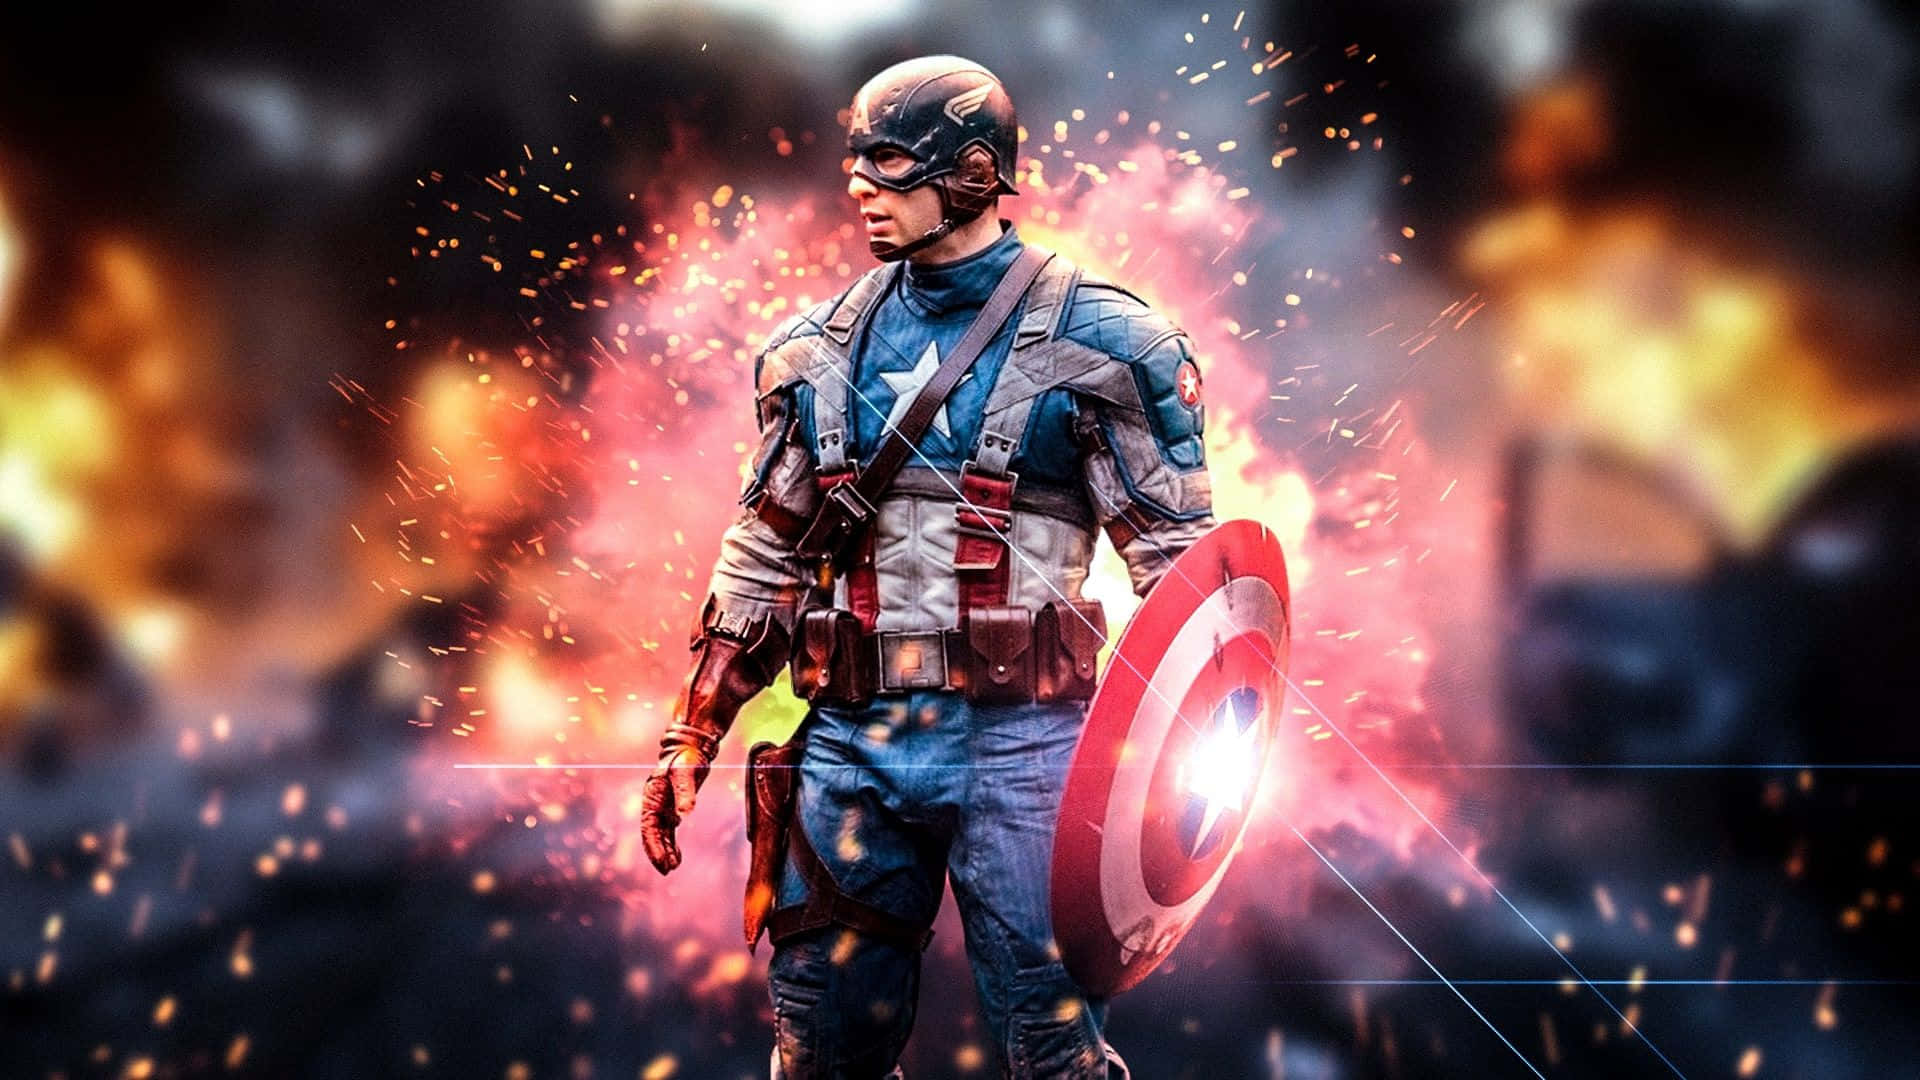 Captain America Action Backdrop